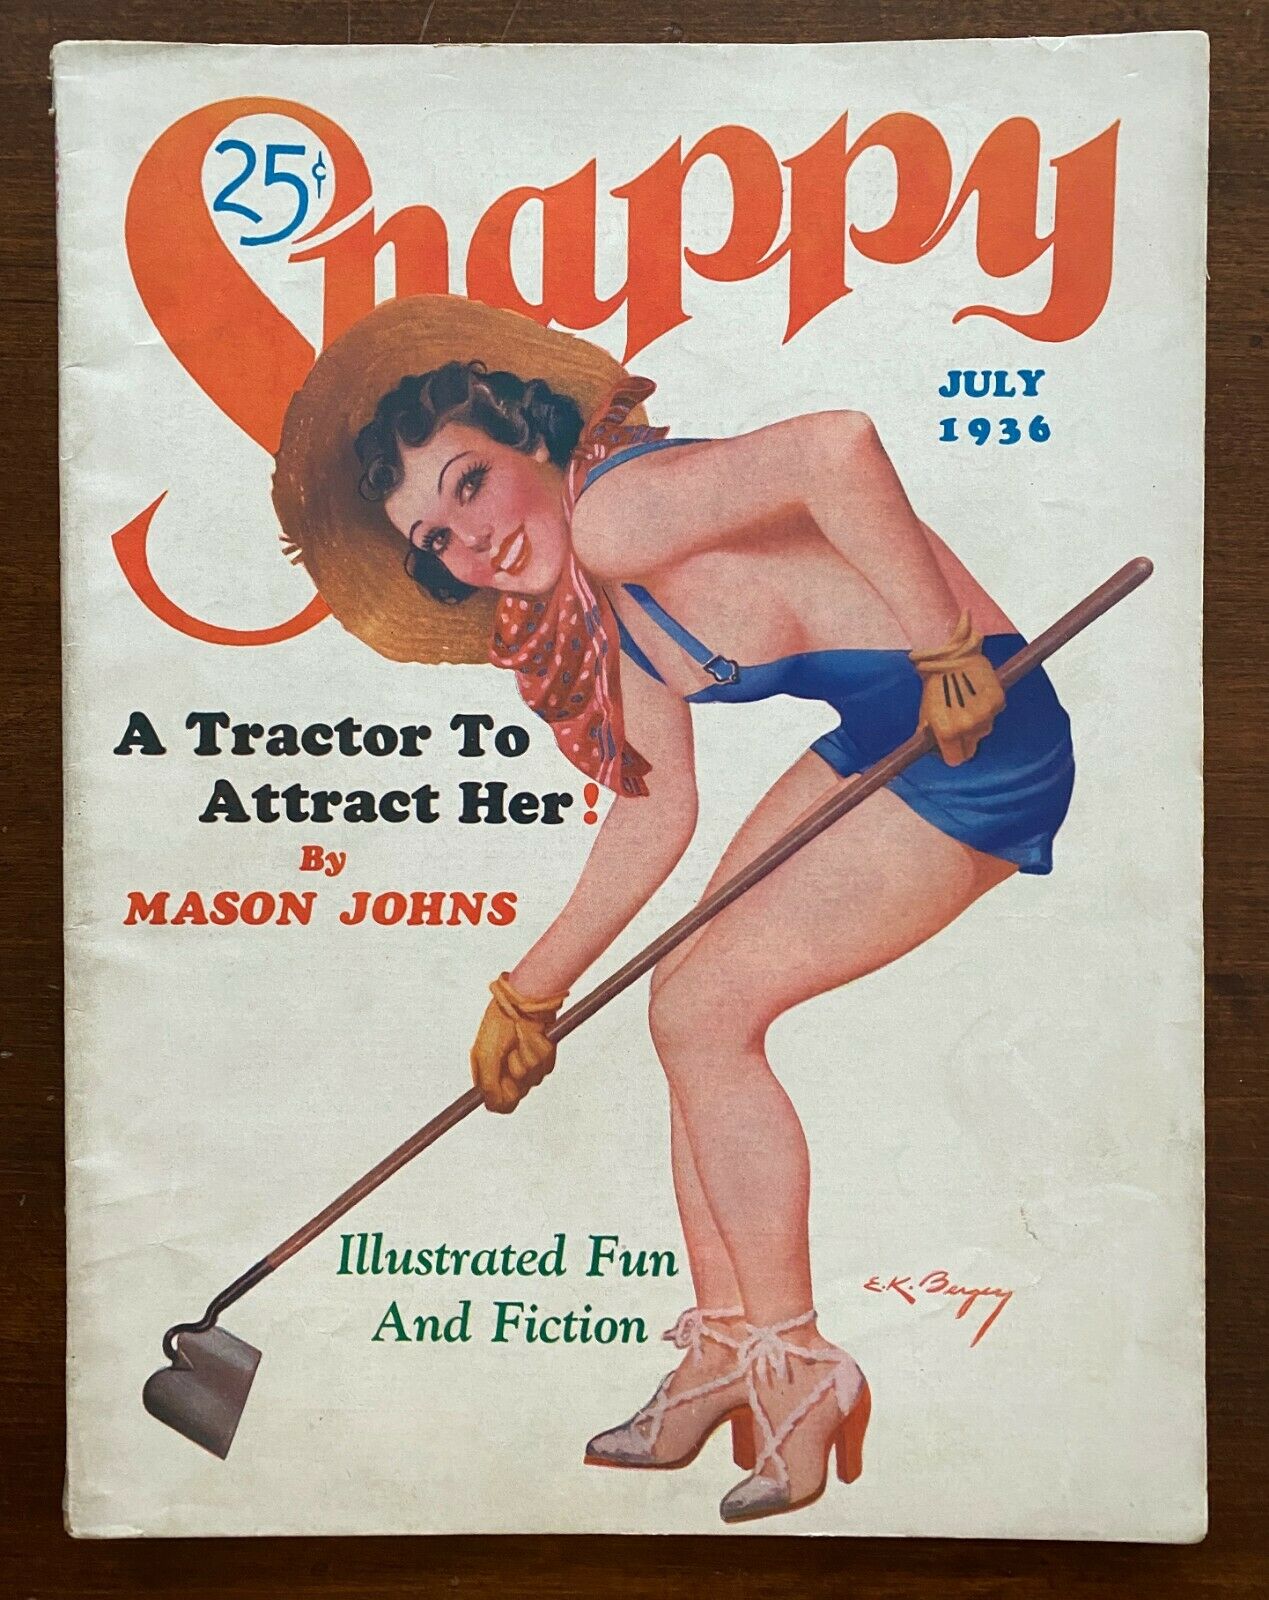 Snappy - July 1936